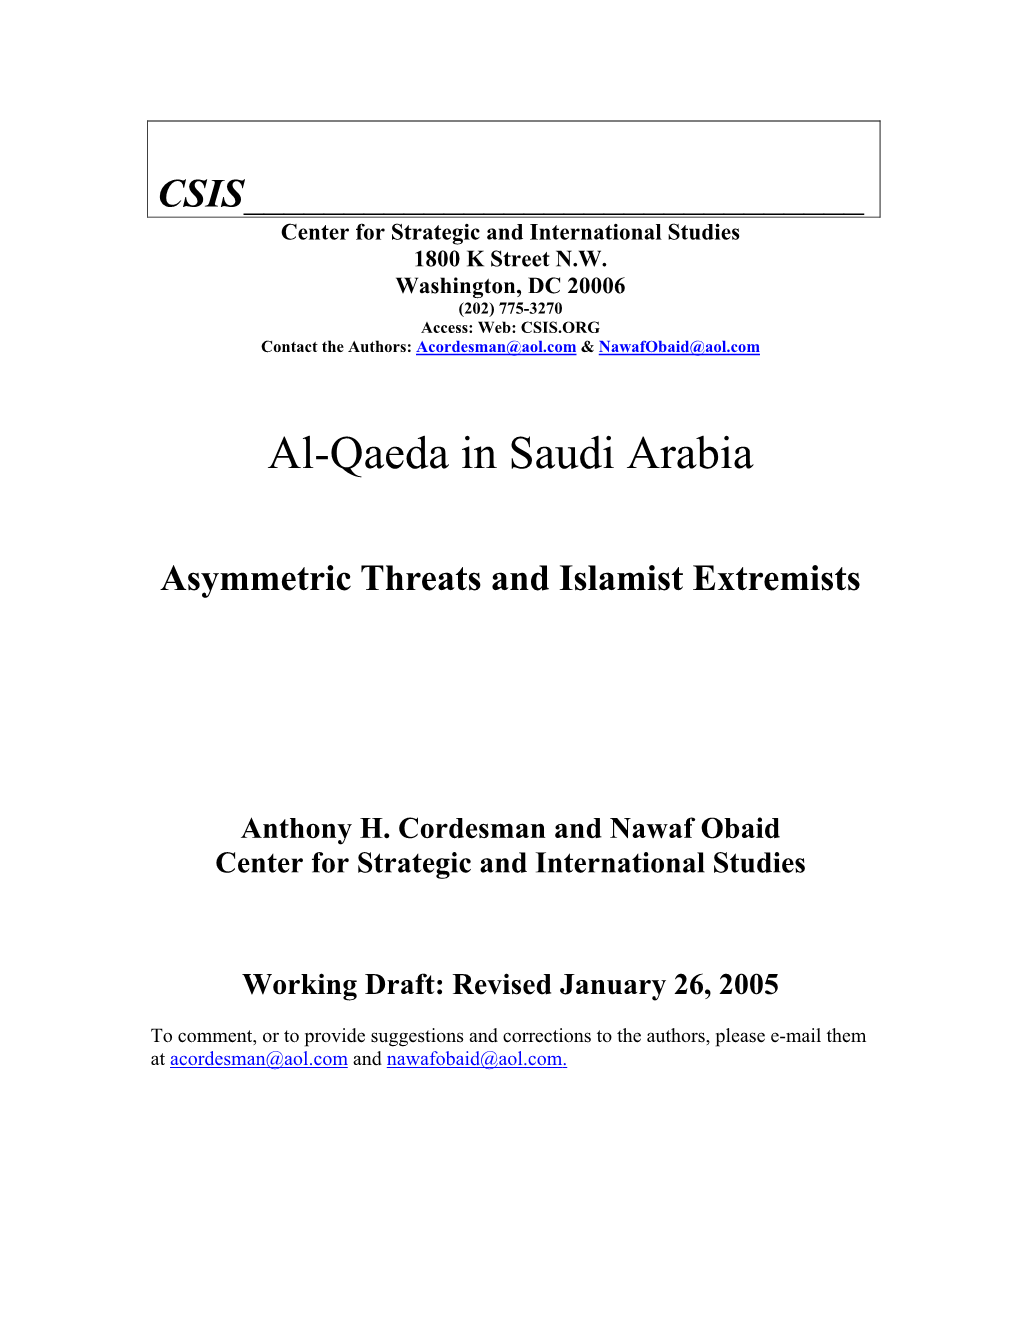 Al-Qaeda in Saudi Arabia Asymmetric Threats and Islamist Extremists